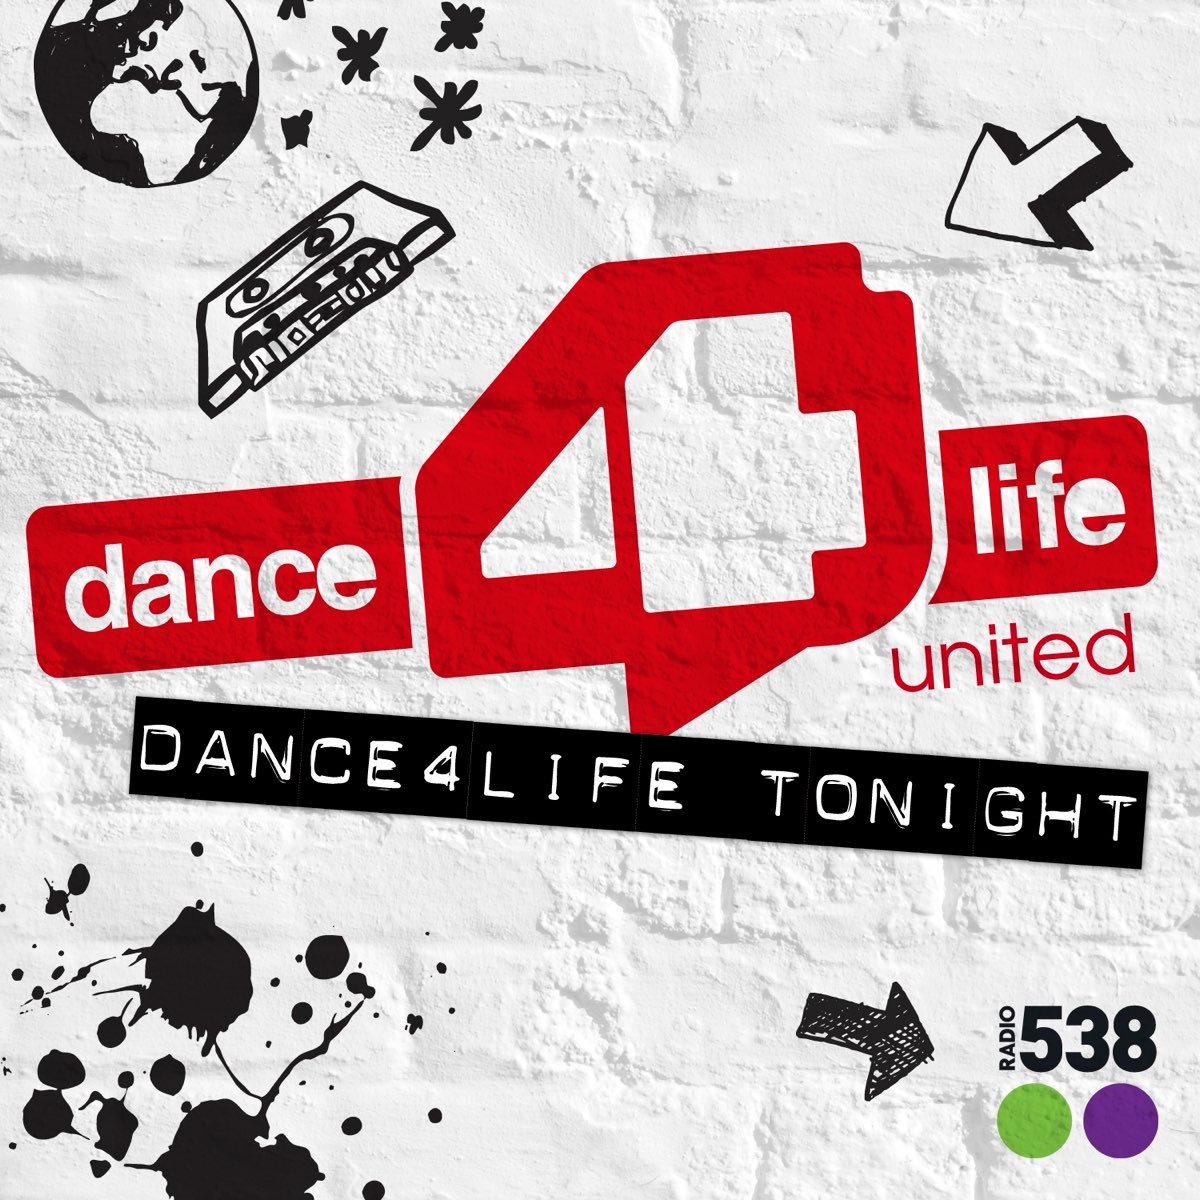 Dance 4 life. Dance4life Muscot. Dance for Life 4. Tiesto dance4life.